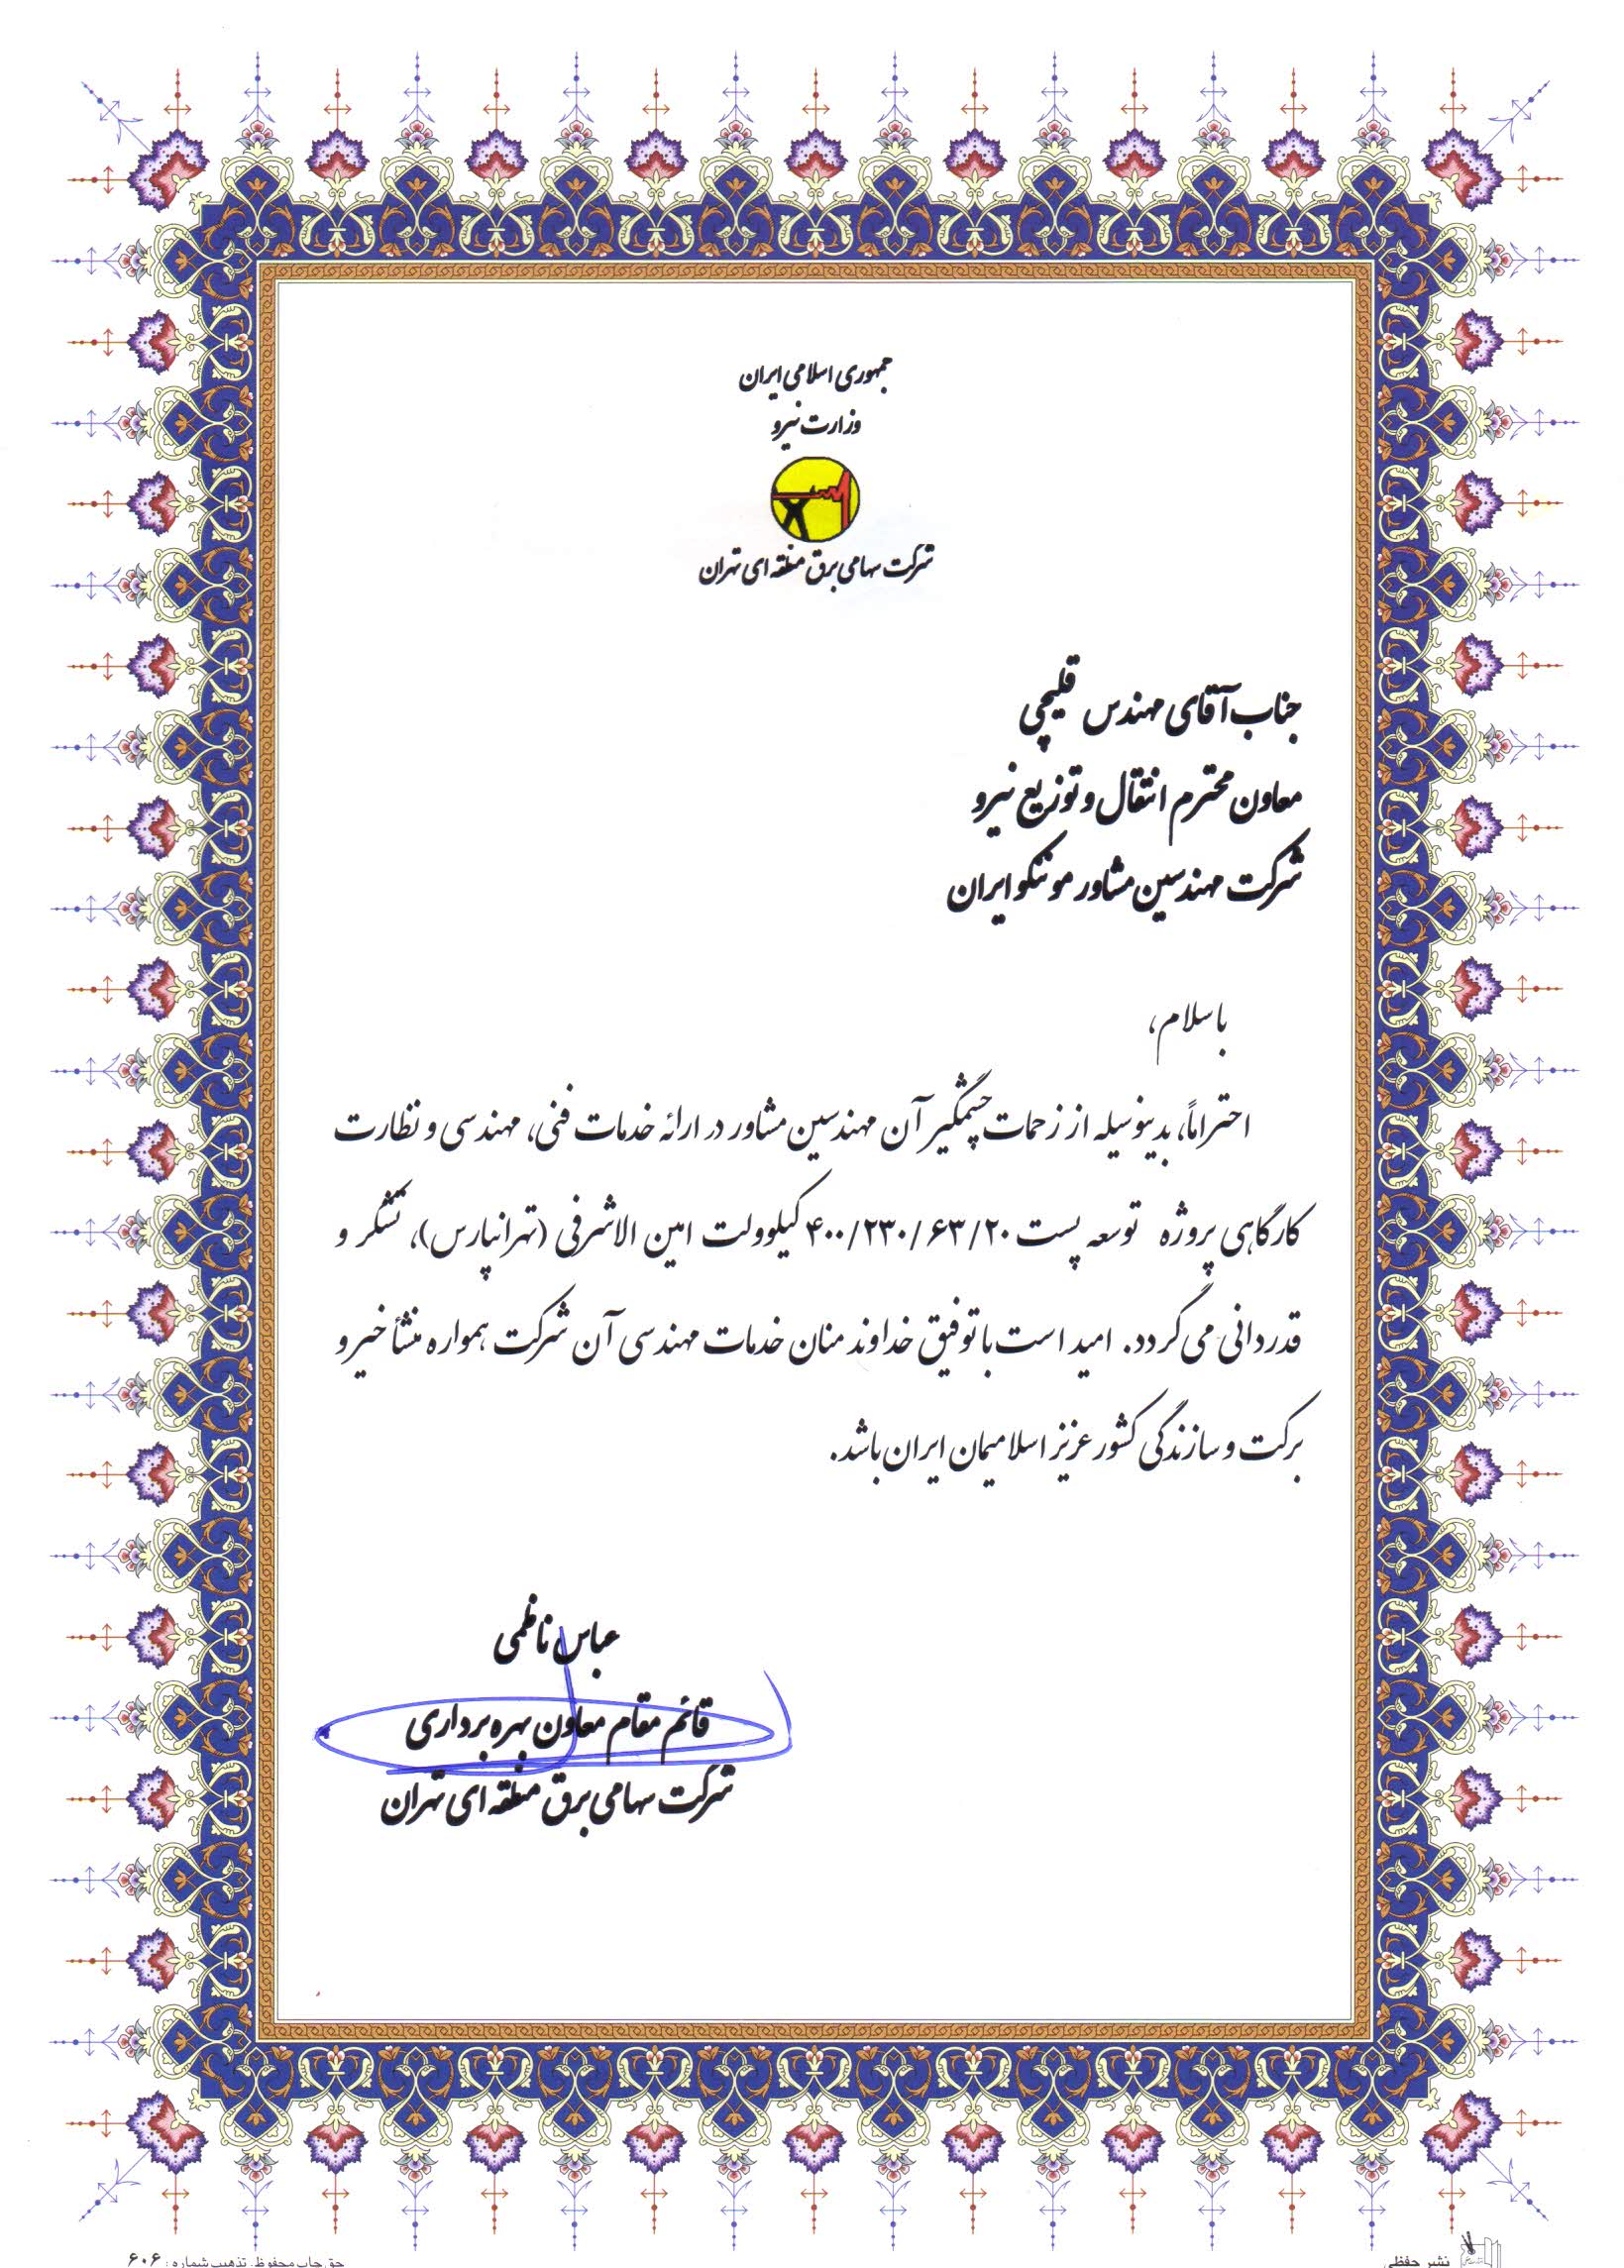 Certificate of Appreciation from Tehran Regional Electric Company